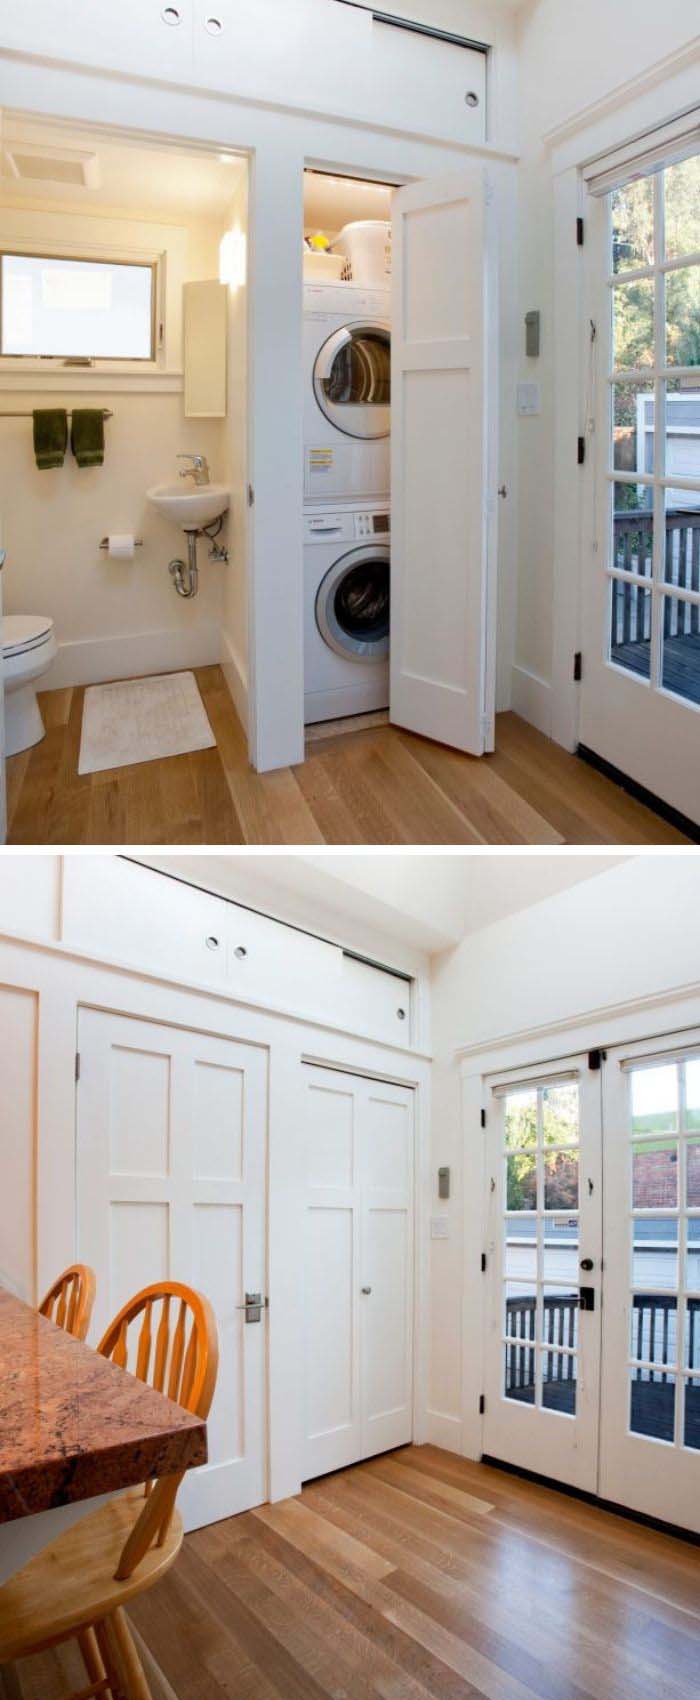 Folded Door for Mini Laundry Closet in Kitchen Area #laundry #closetdoors #decorhomeideas